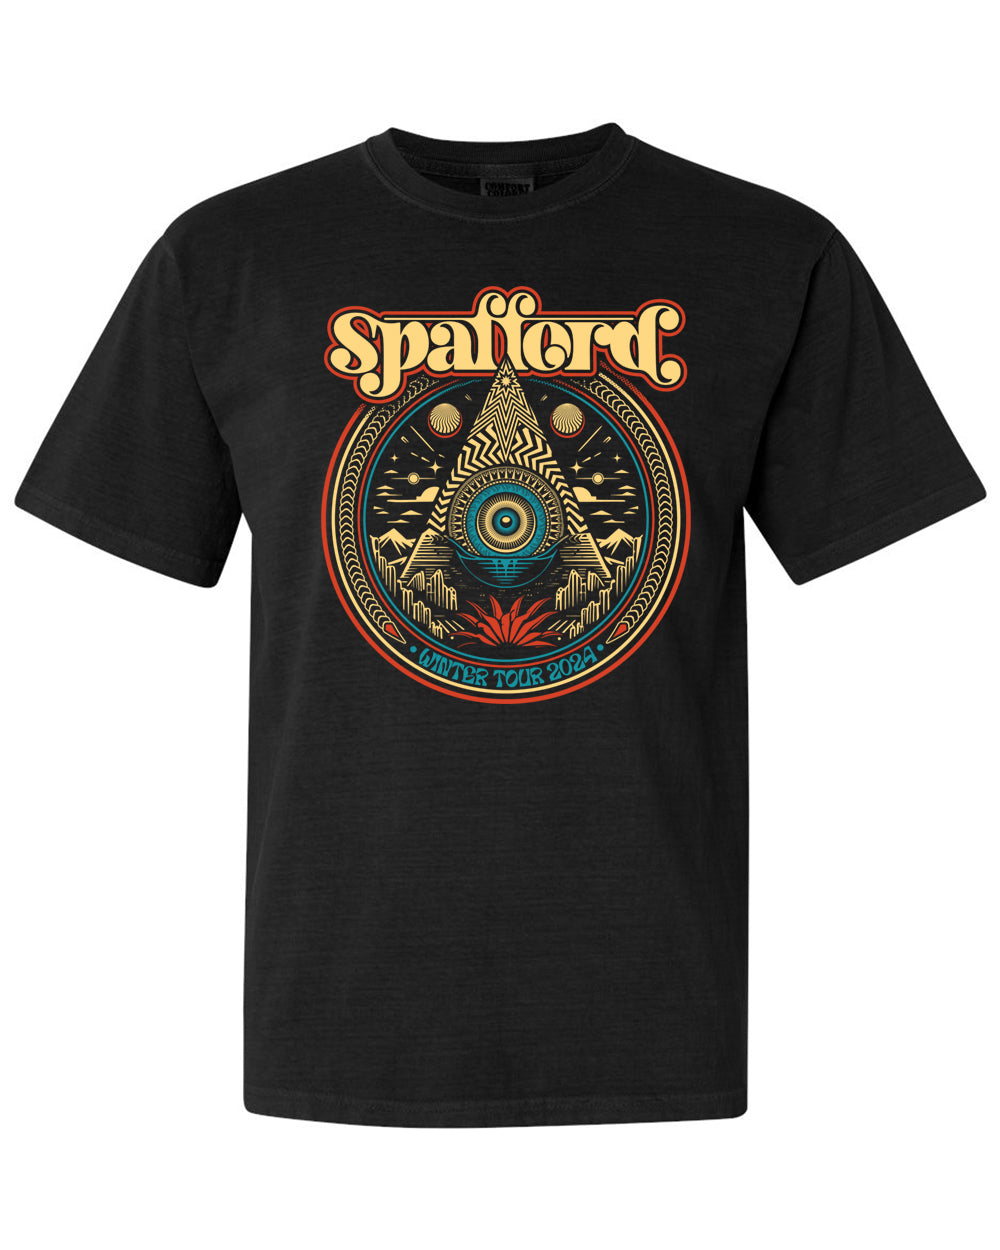 Spafford Winter Tour 24' Comfort Colors T-Shirt - Black